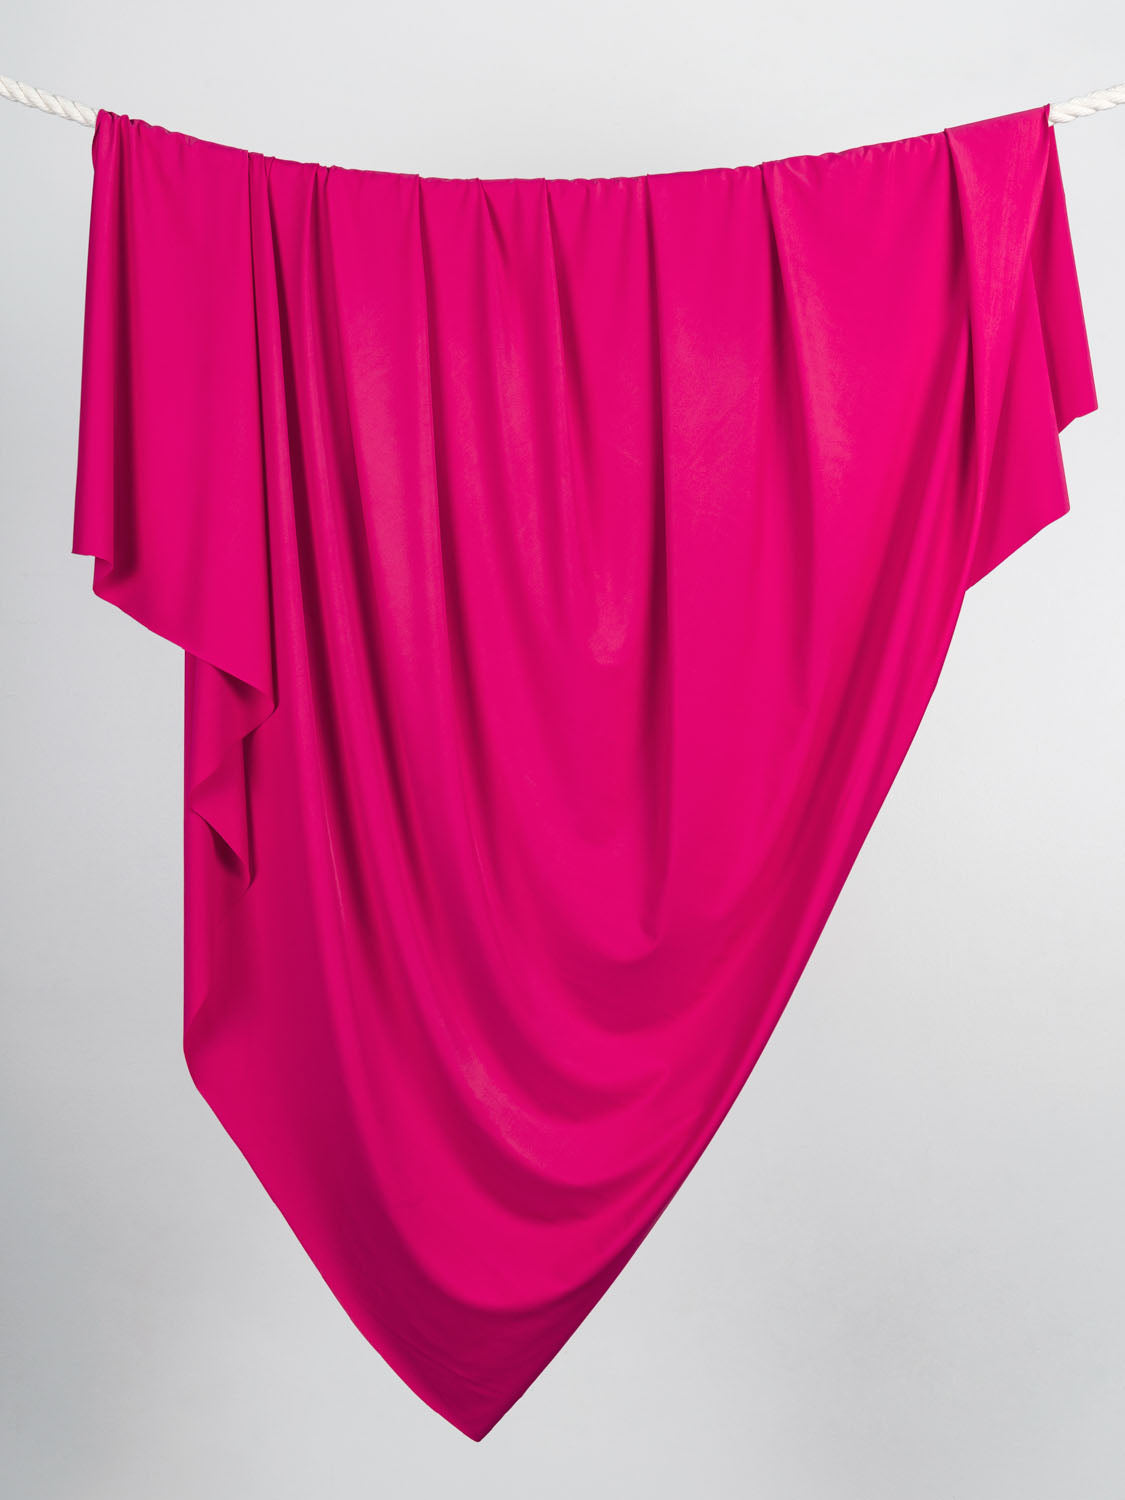 Recycled Nylon Spandex Swimwear Fabric - Vibrant Fuchsia | Core Fabrics